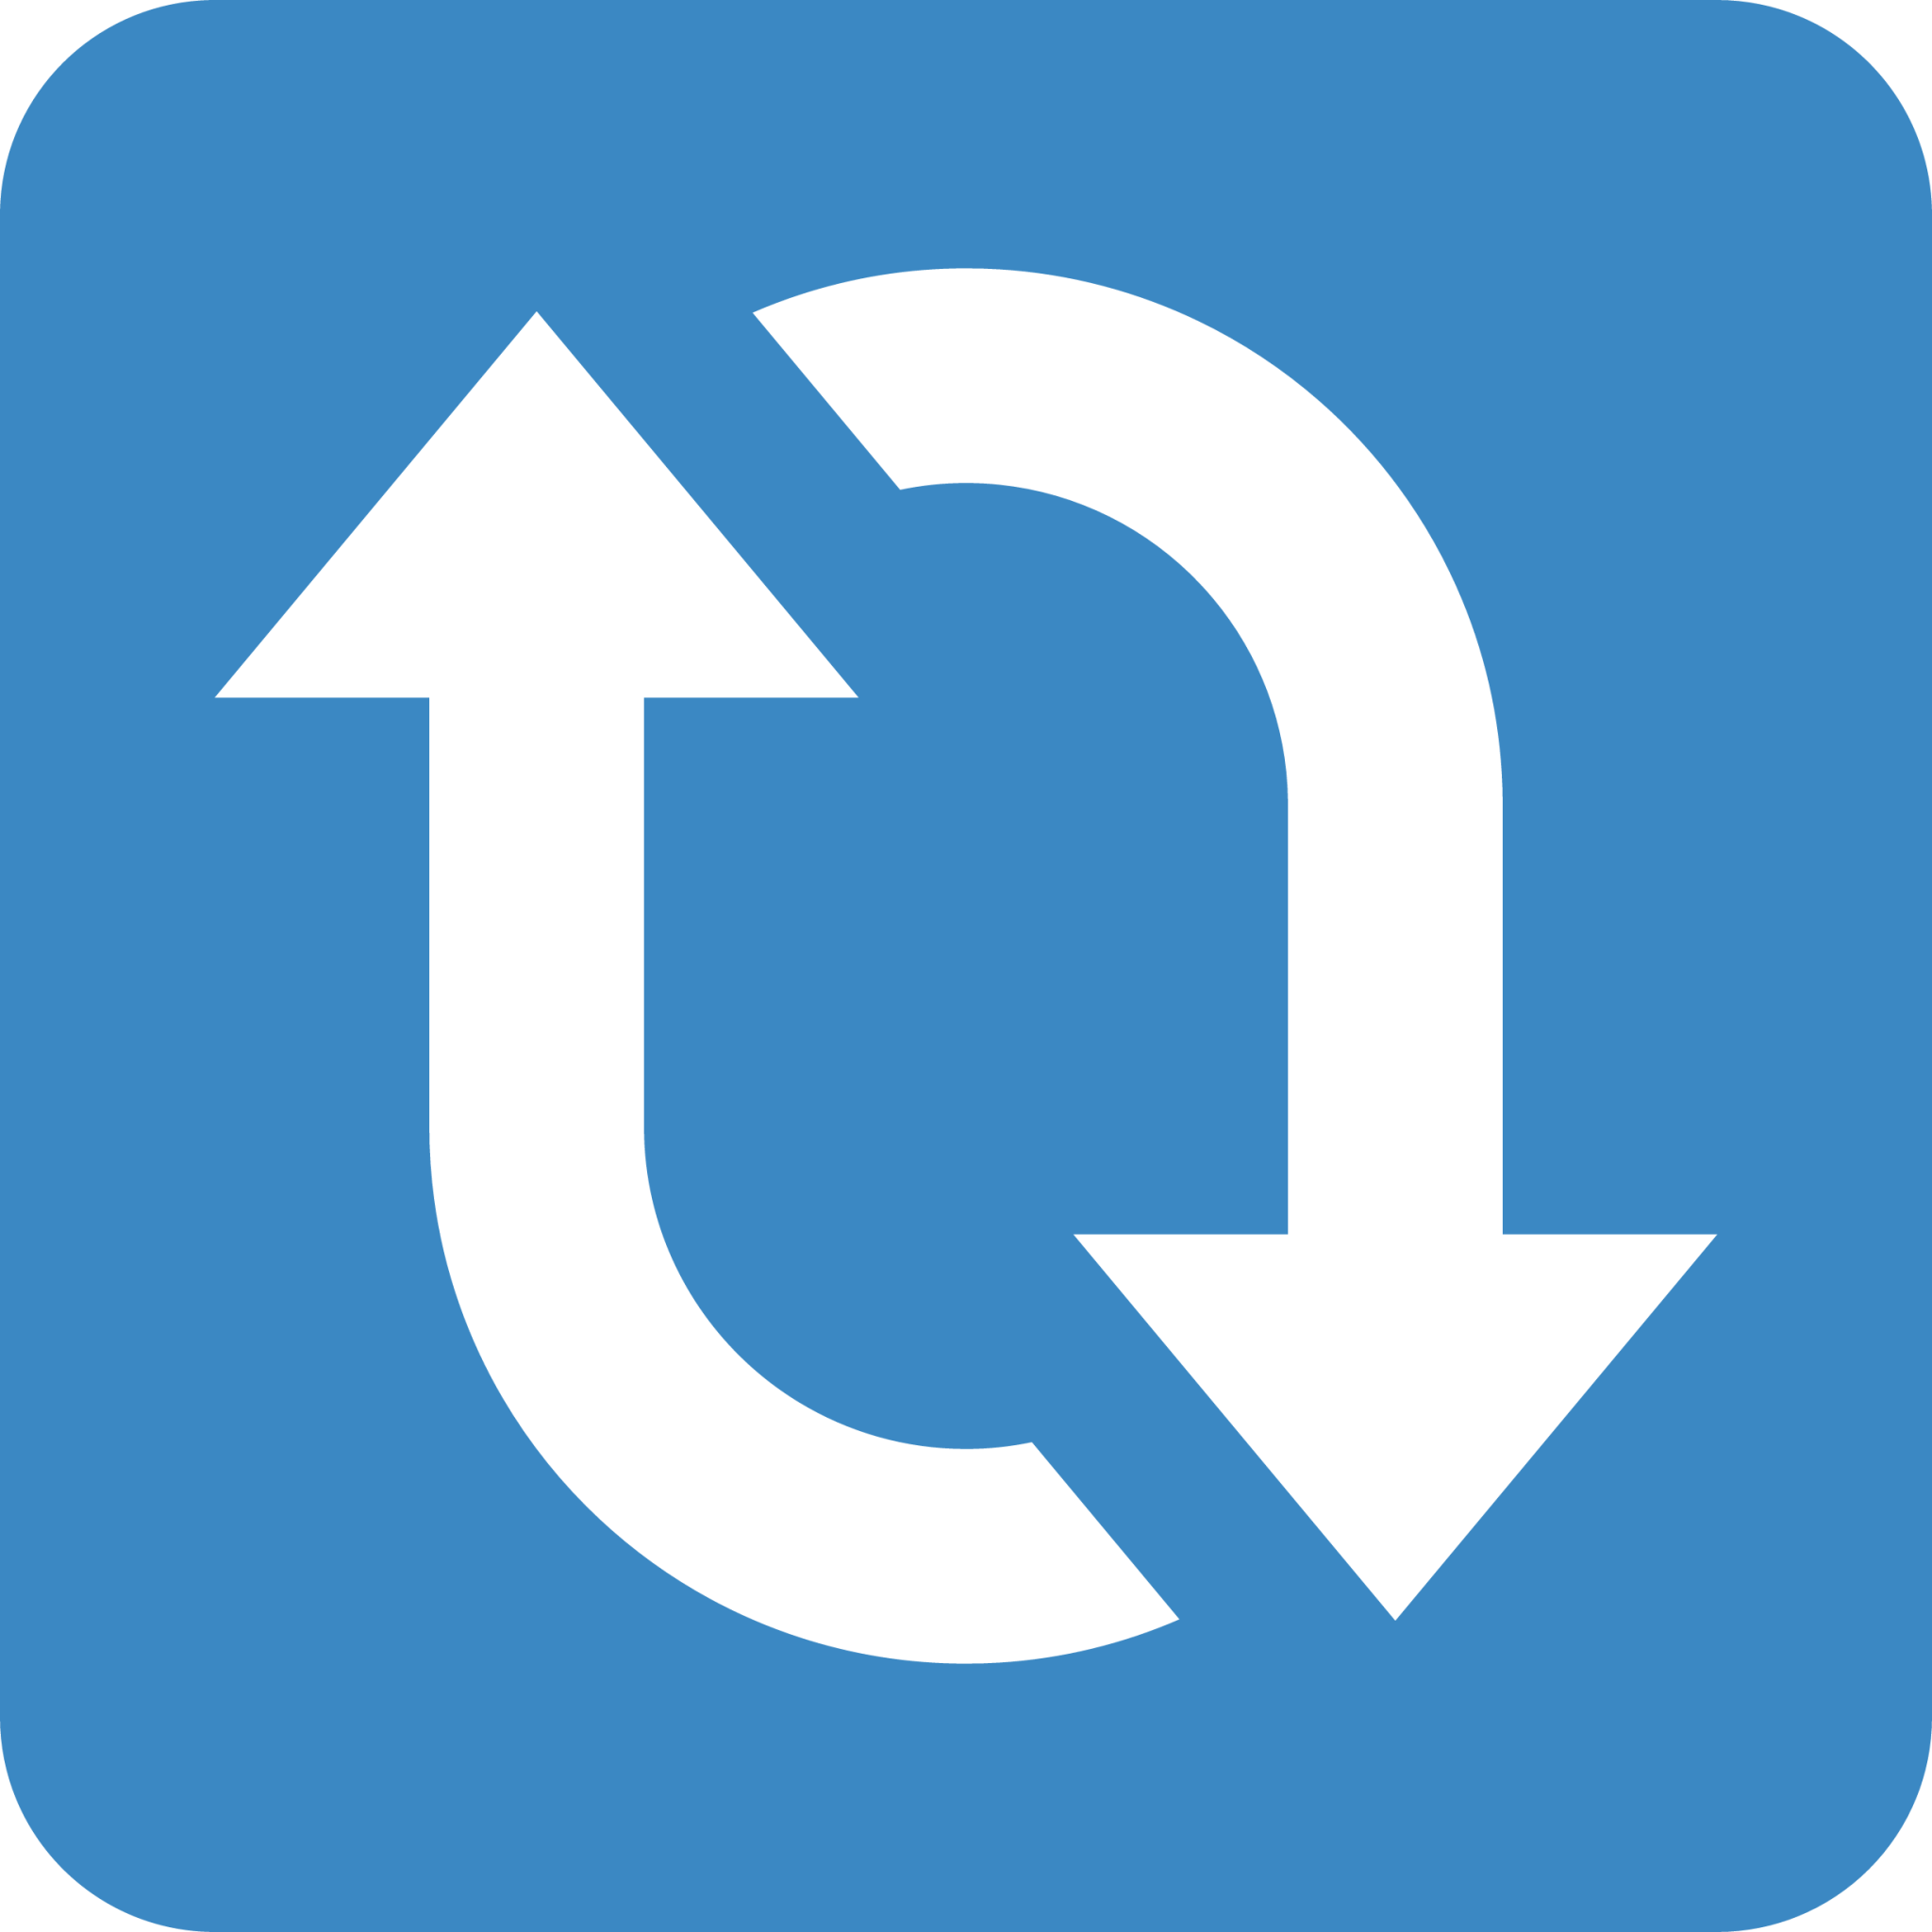 clockwise downwards and upwards open circle arrows emoji